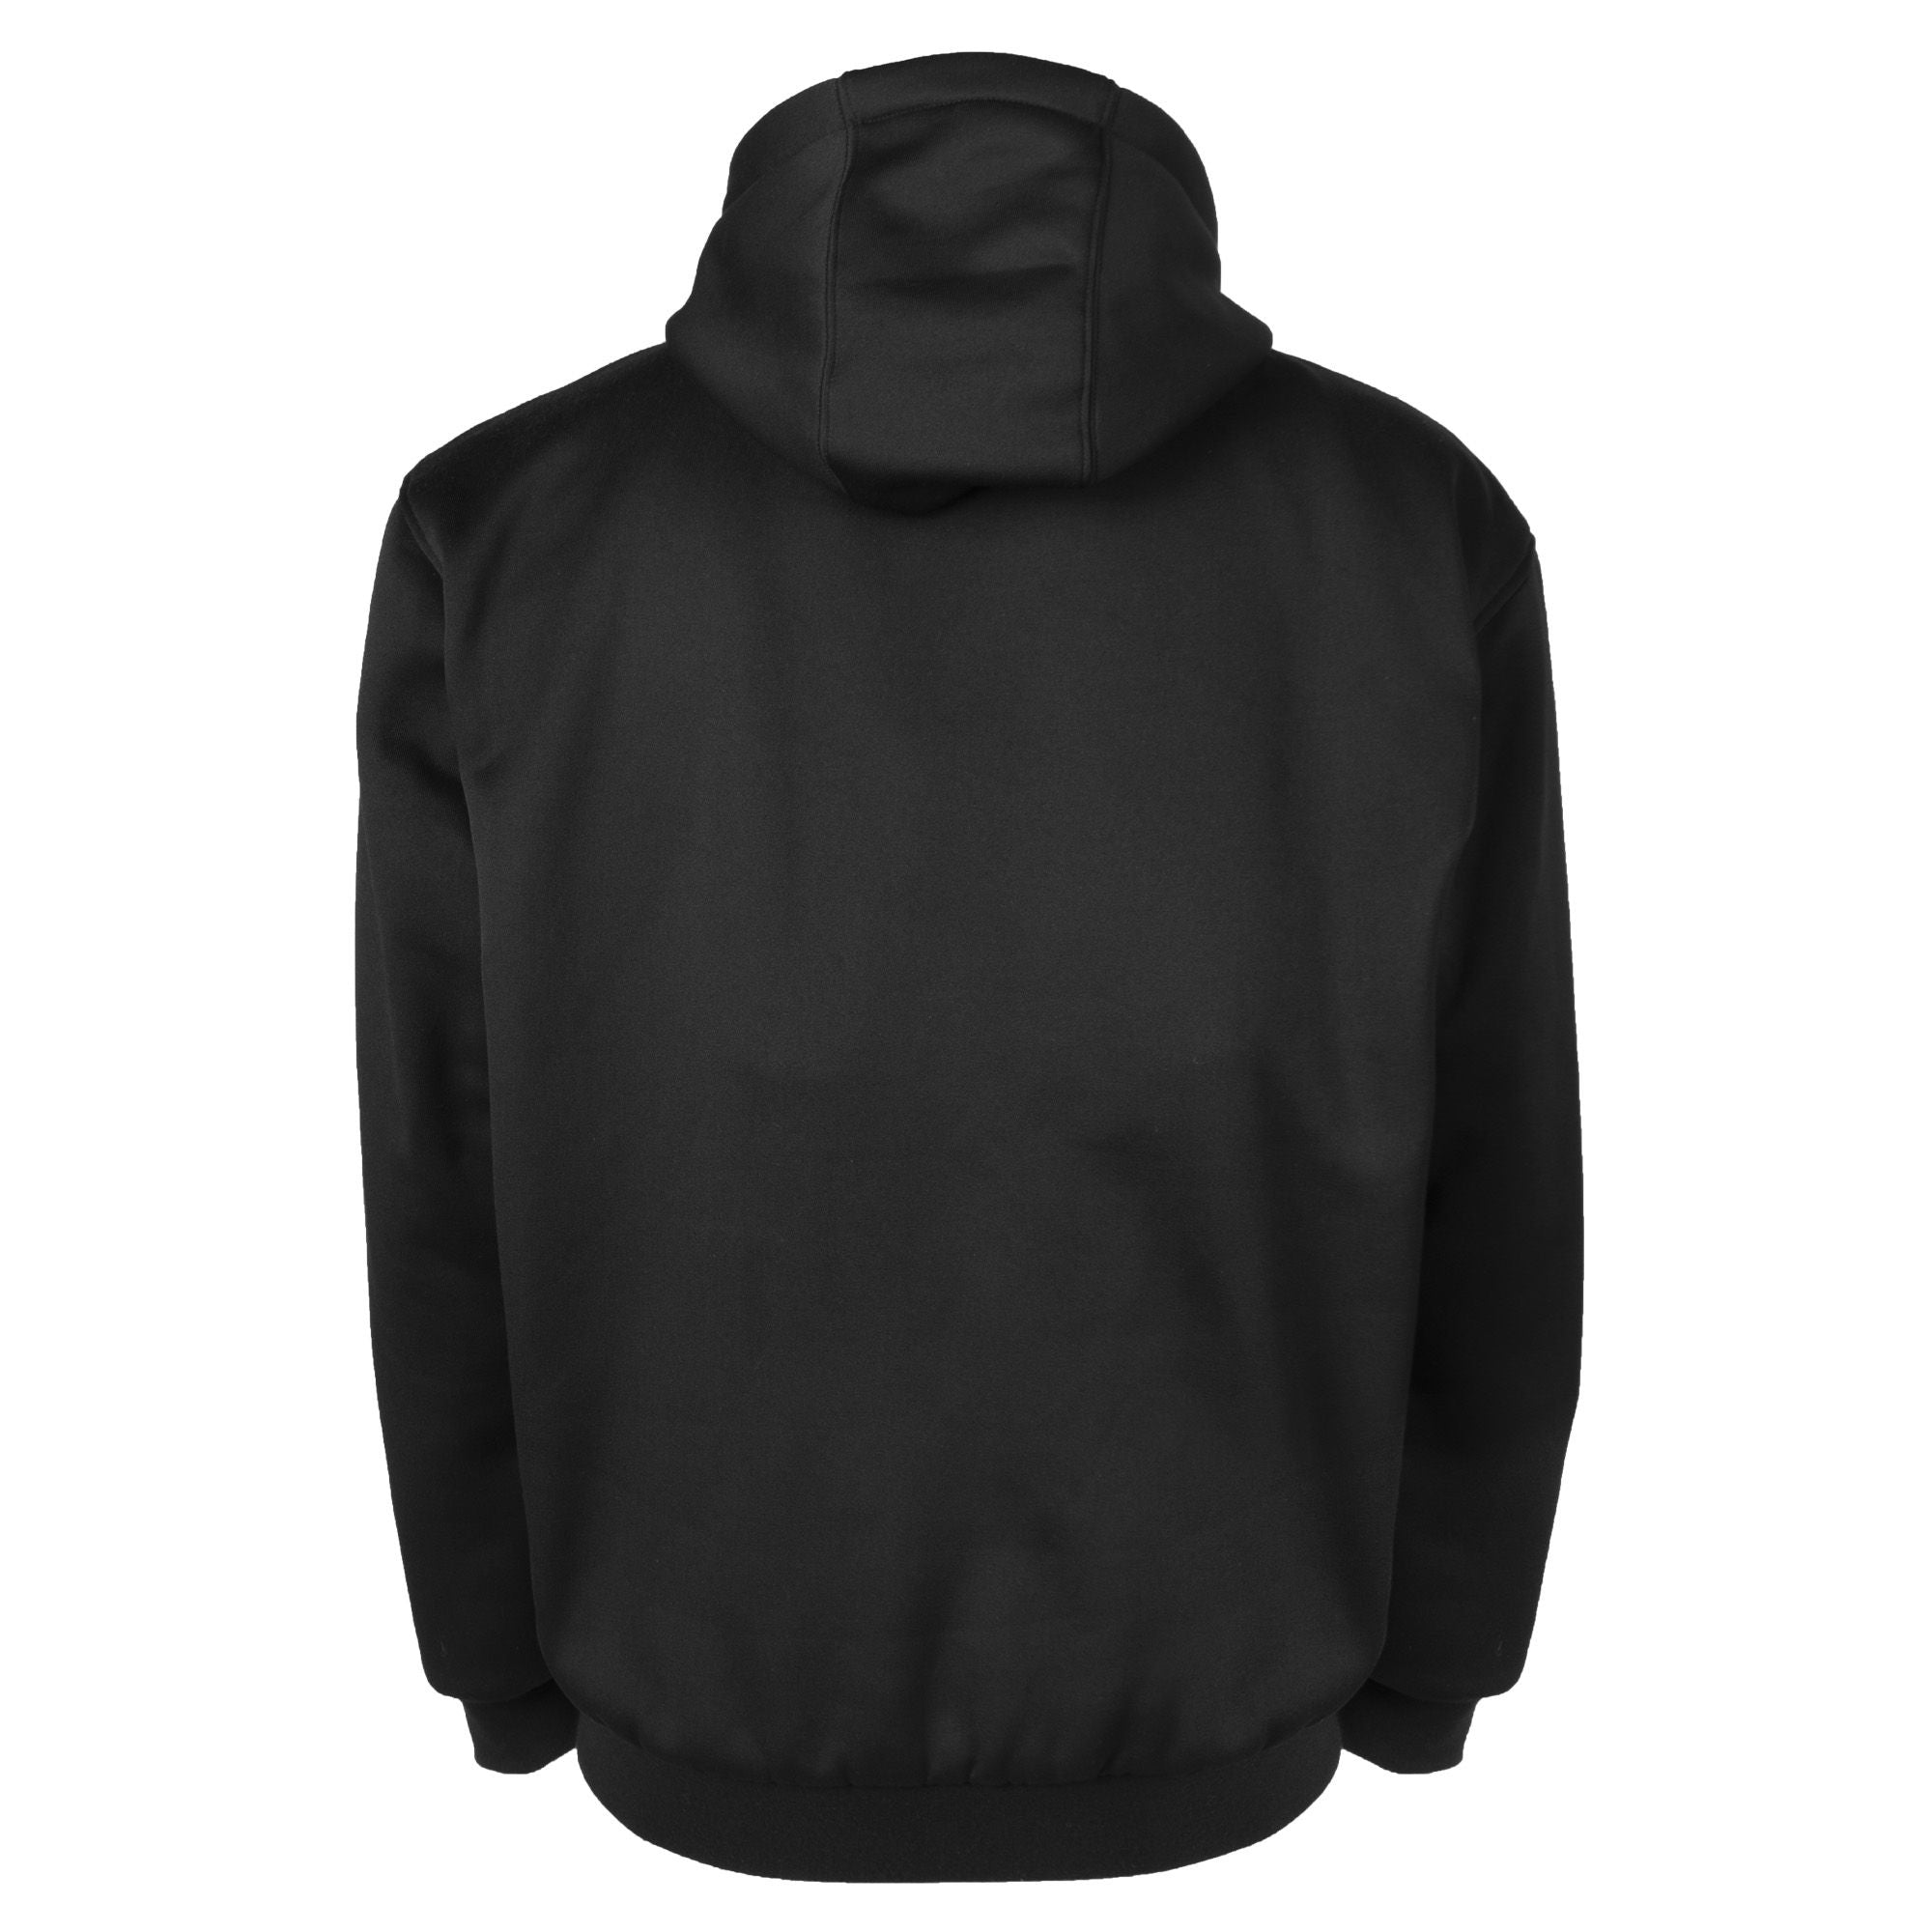 Terra Men's Black Heated Zip-Front Hoodie with Detachable Hood and Battery